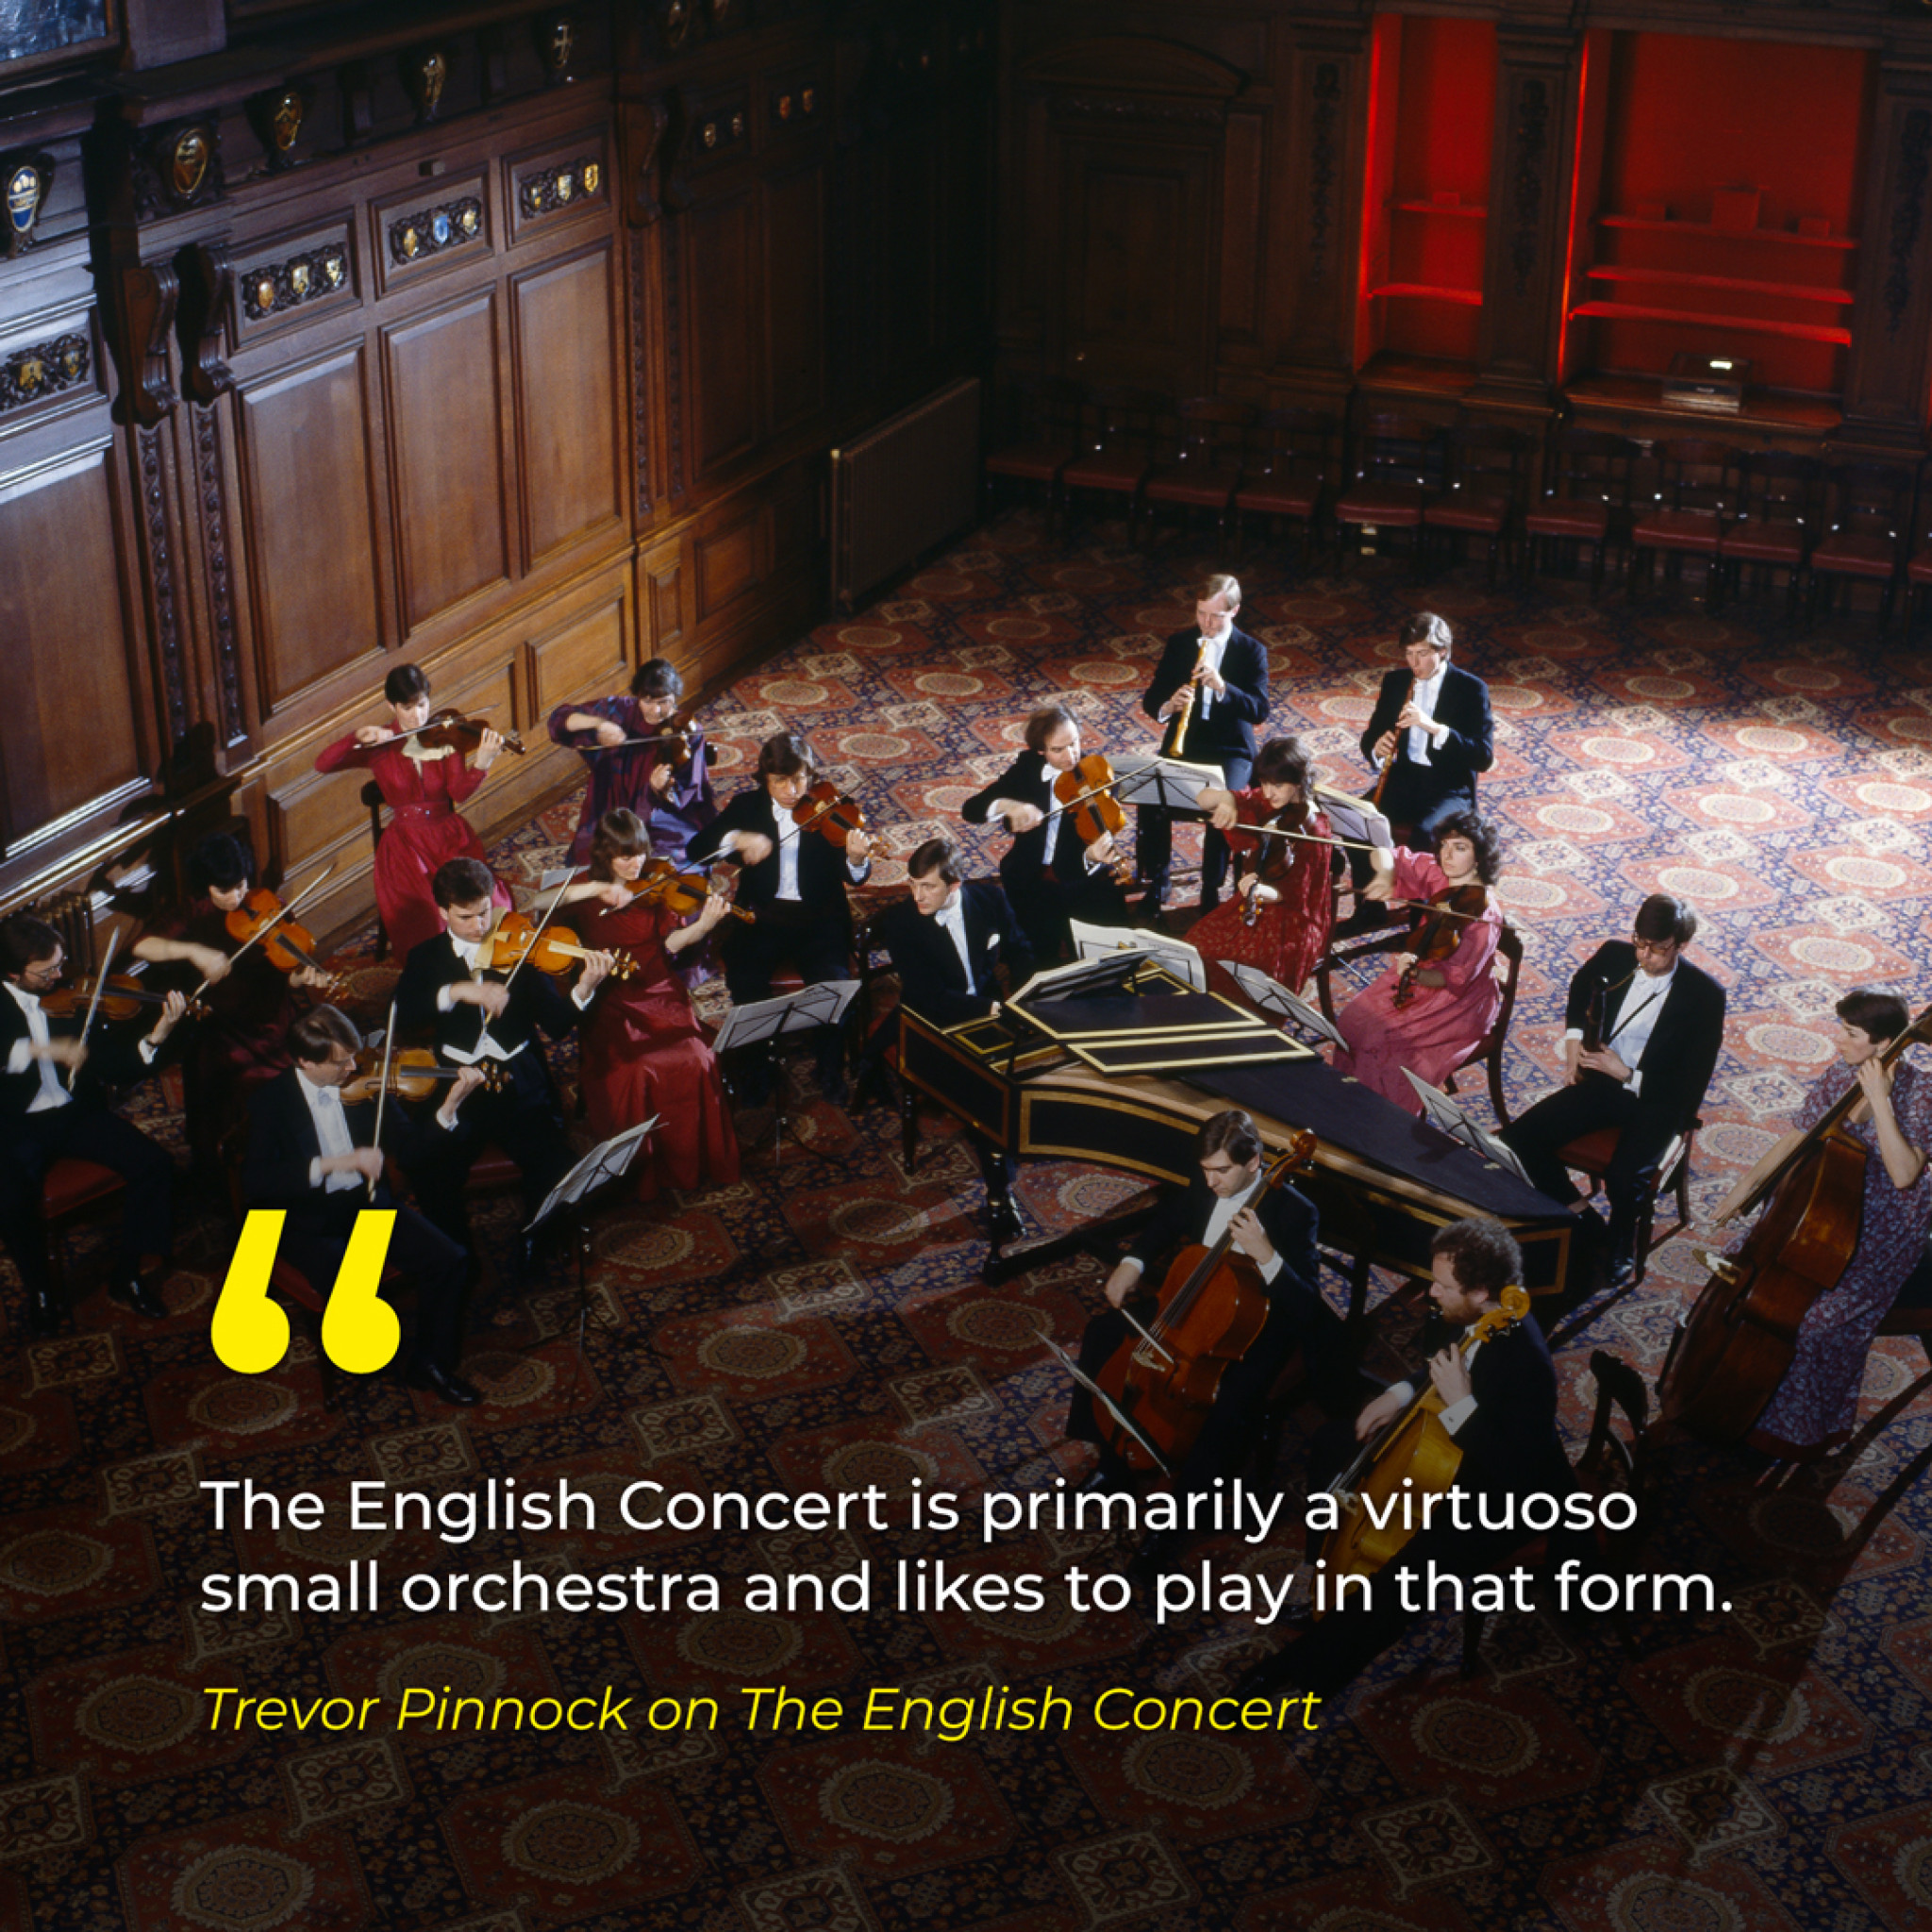 Trevor Pinnock - Quote on The English Concert 3.jpg